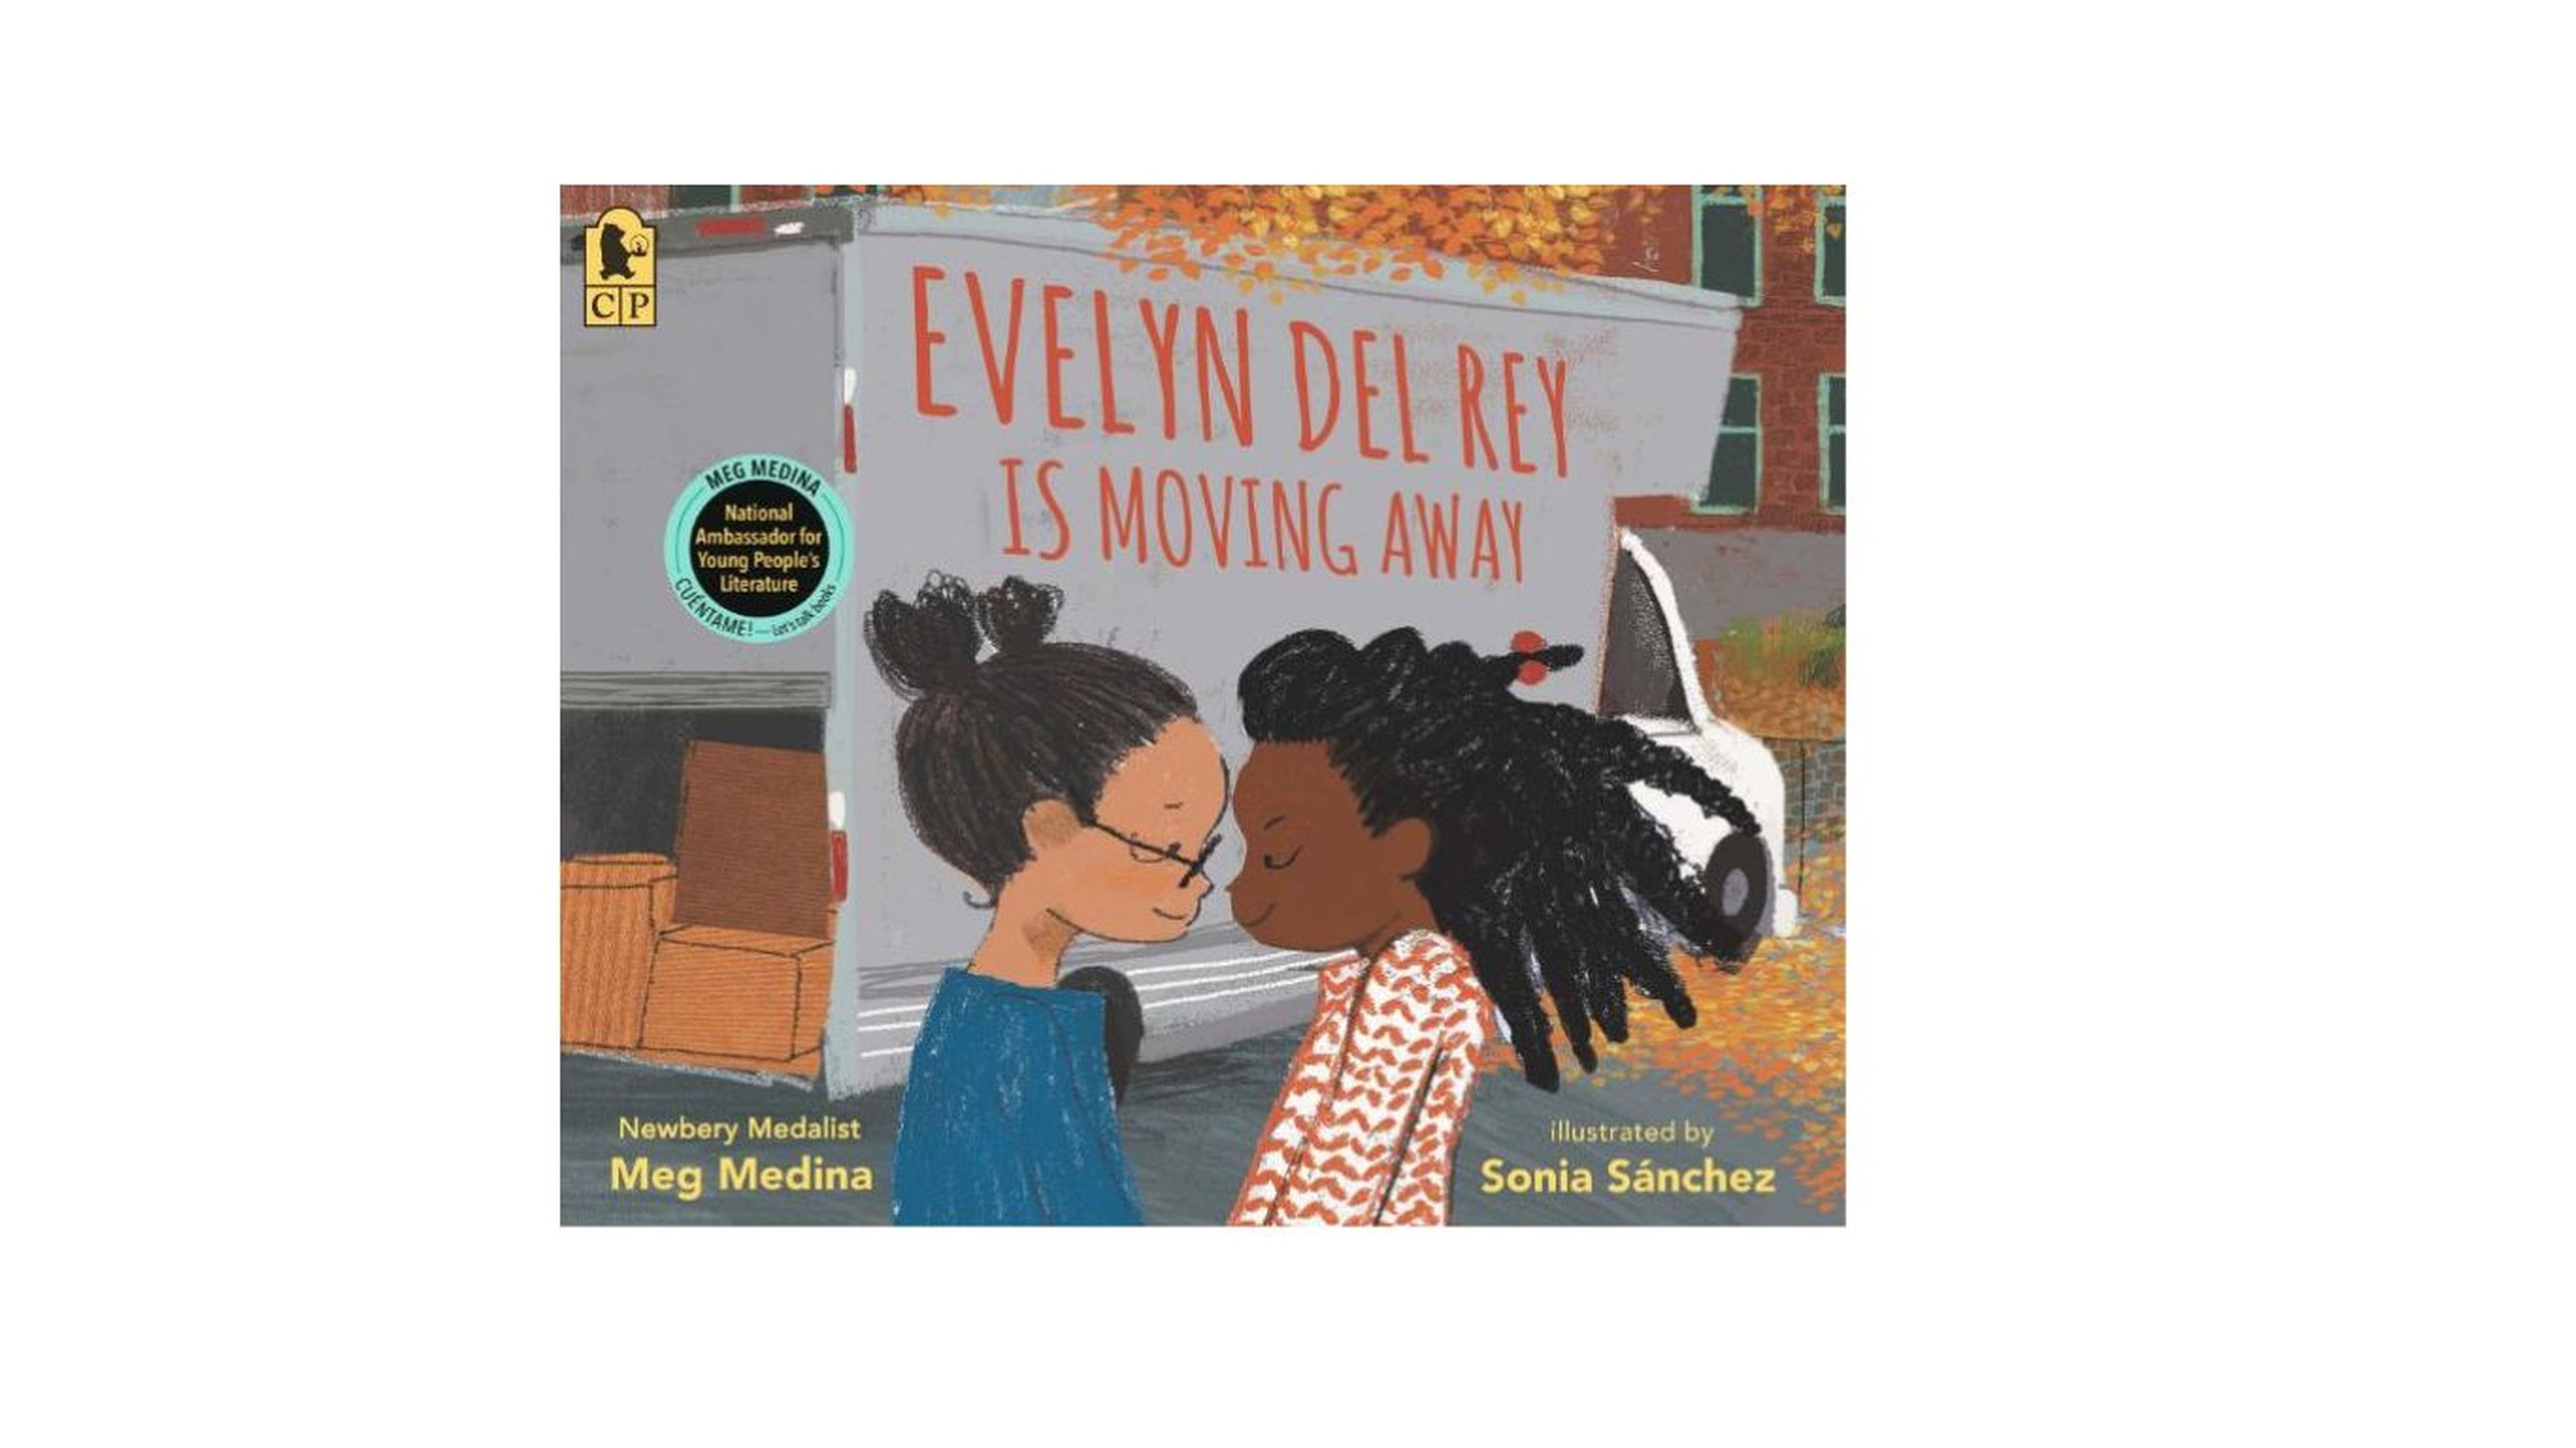  Evelyn Del Rey Is Moving Away, de Meg Medina